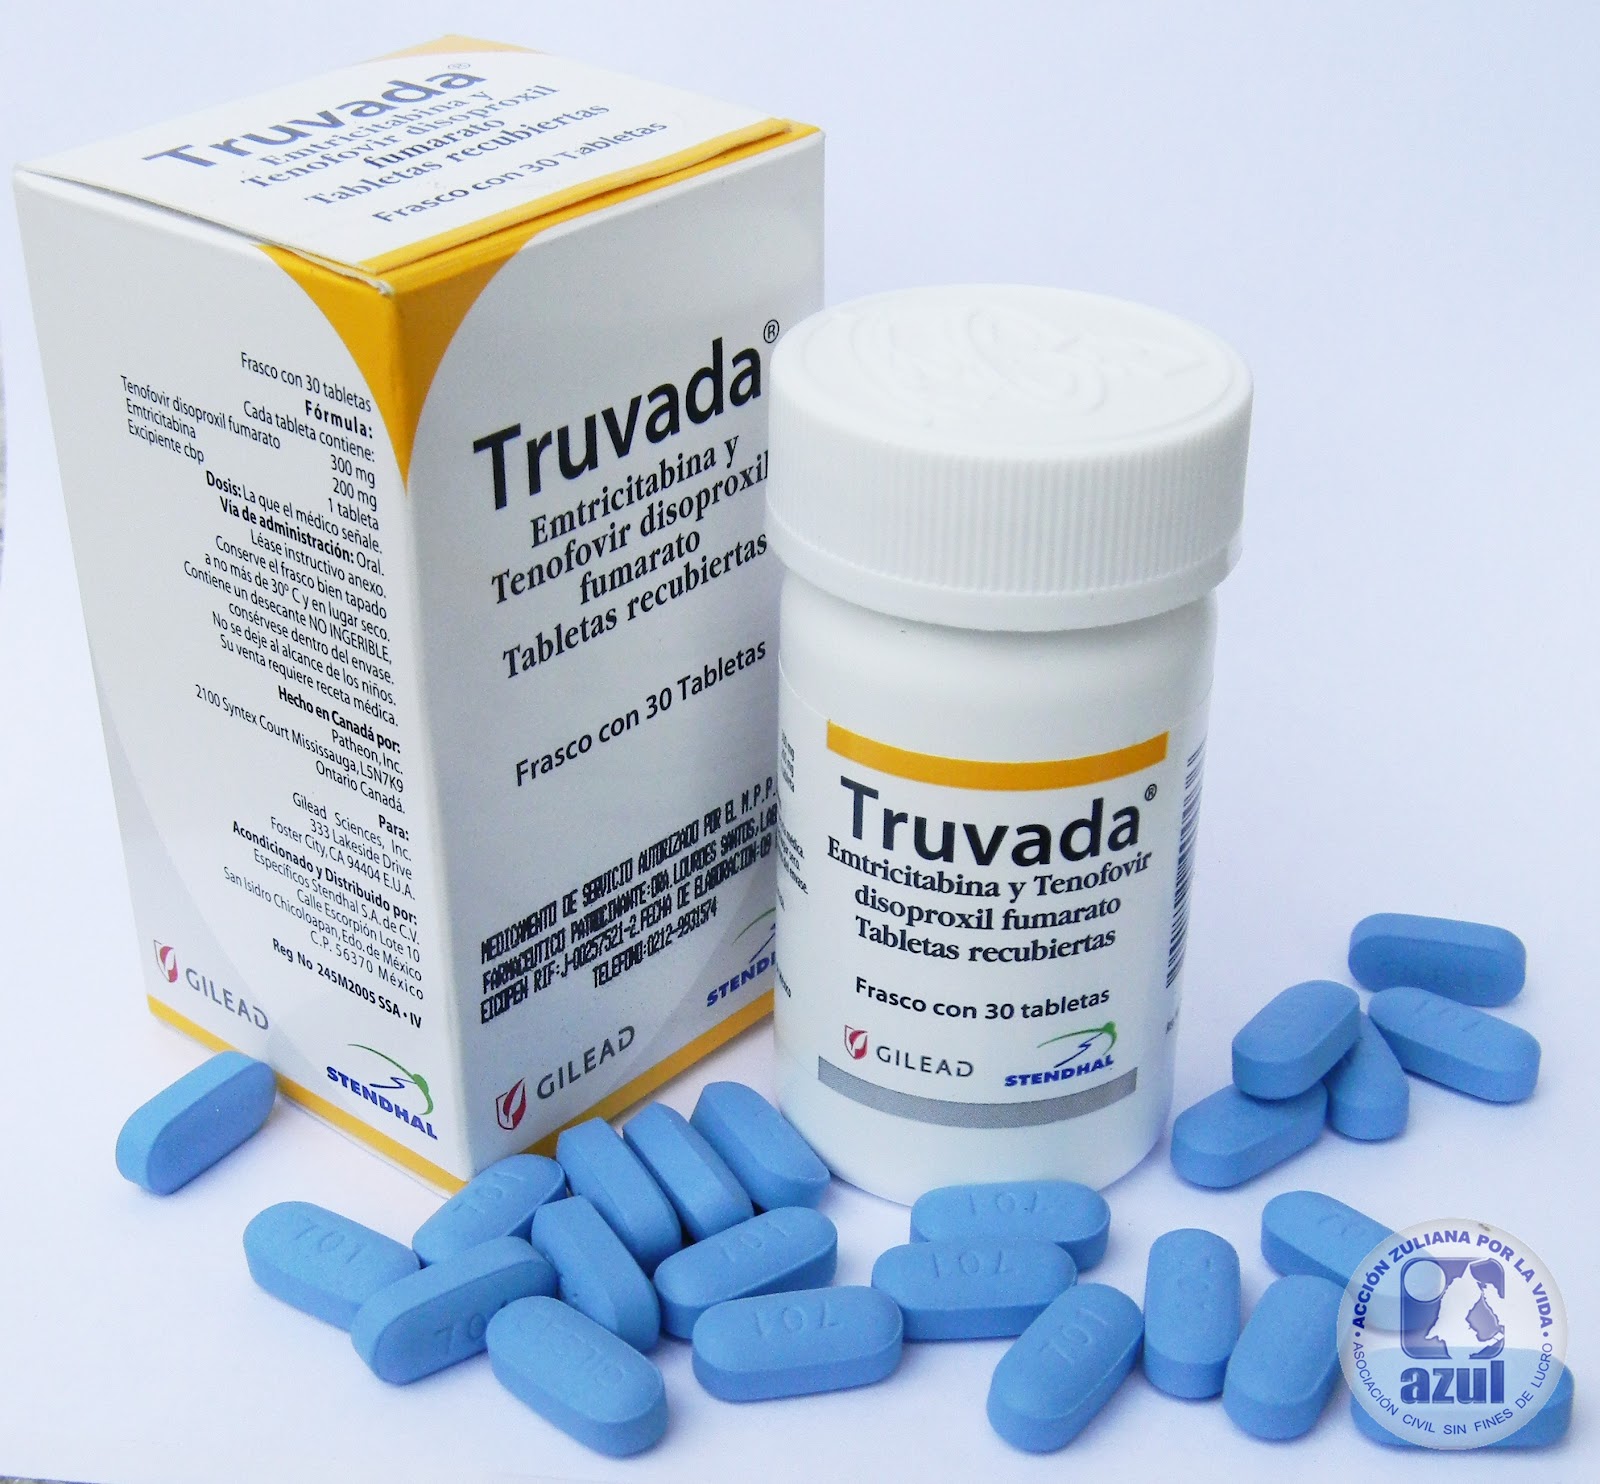 Truvada+medicamento+antirretroviral+TARGA+VIH+HIV+Foto+Johan+Leon.jpg